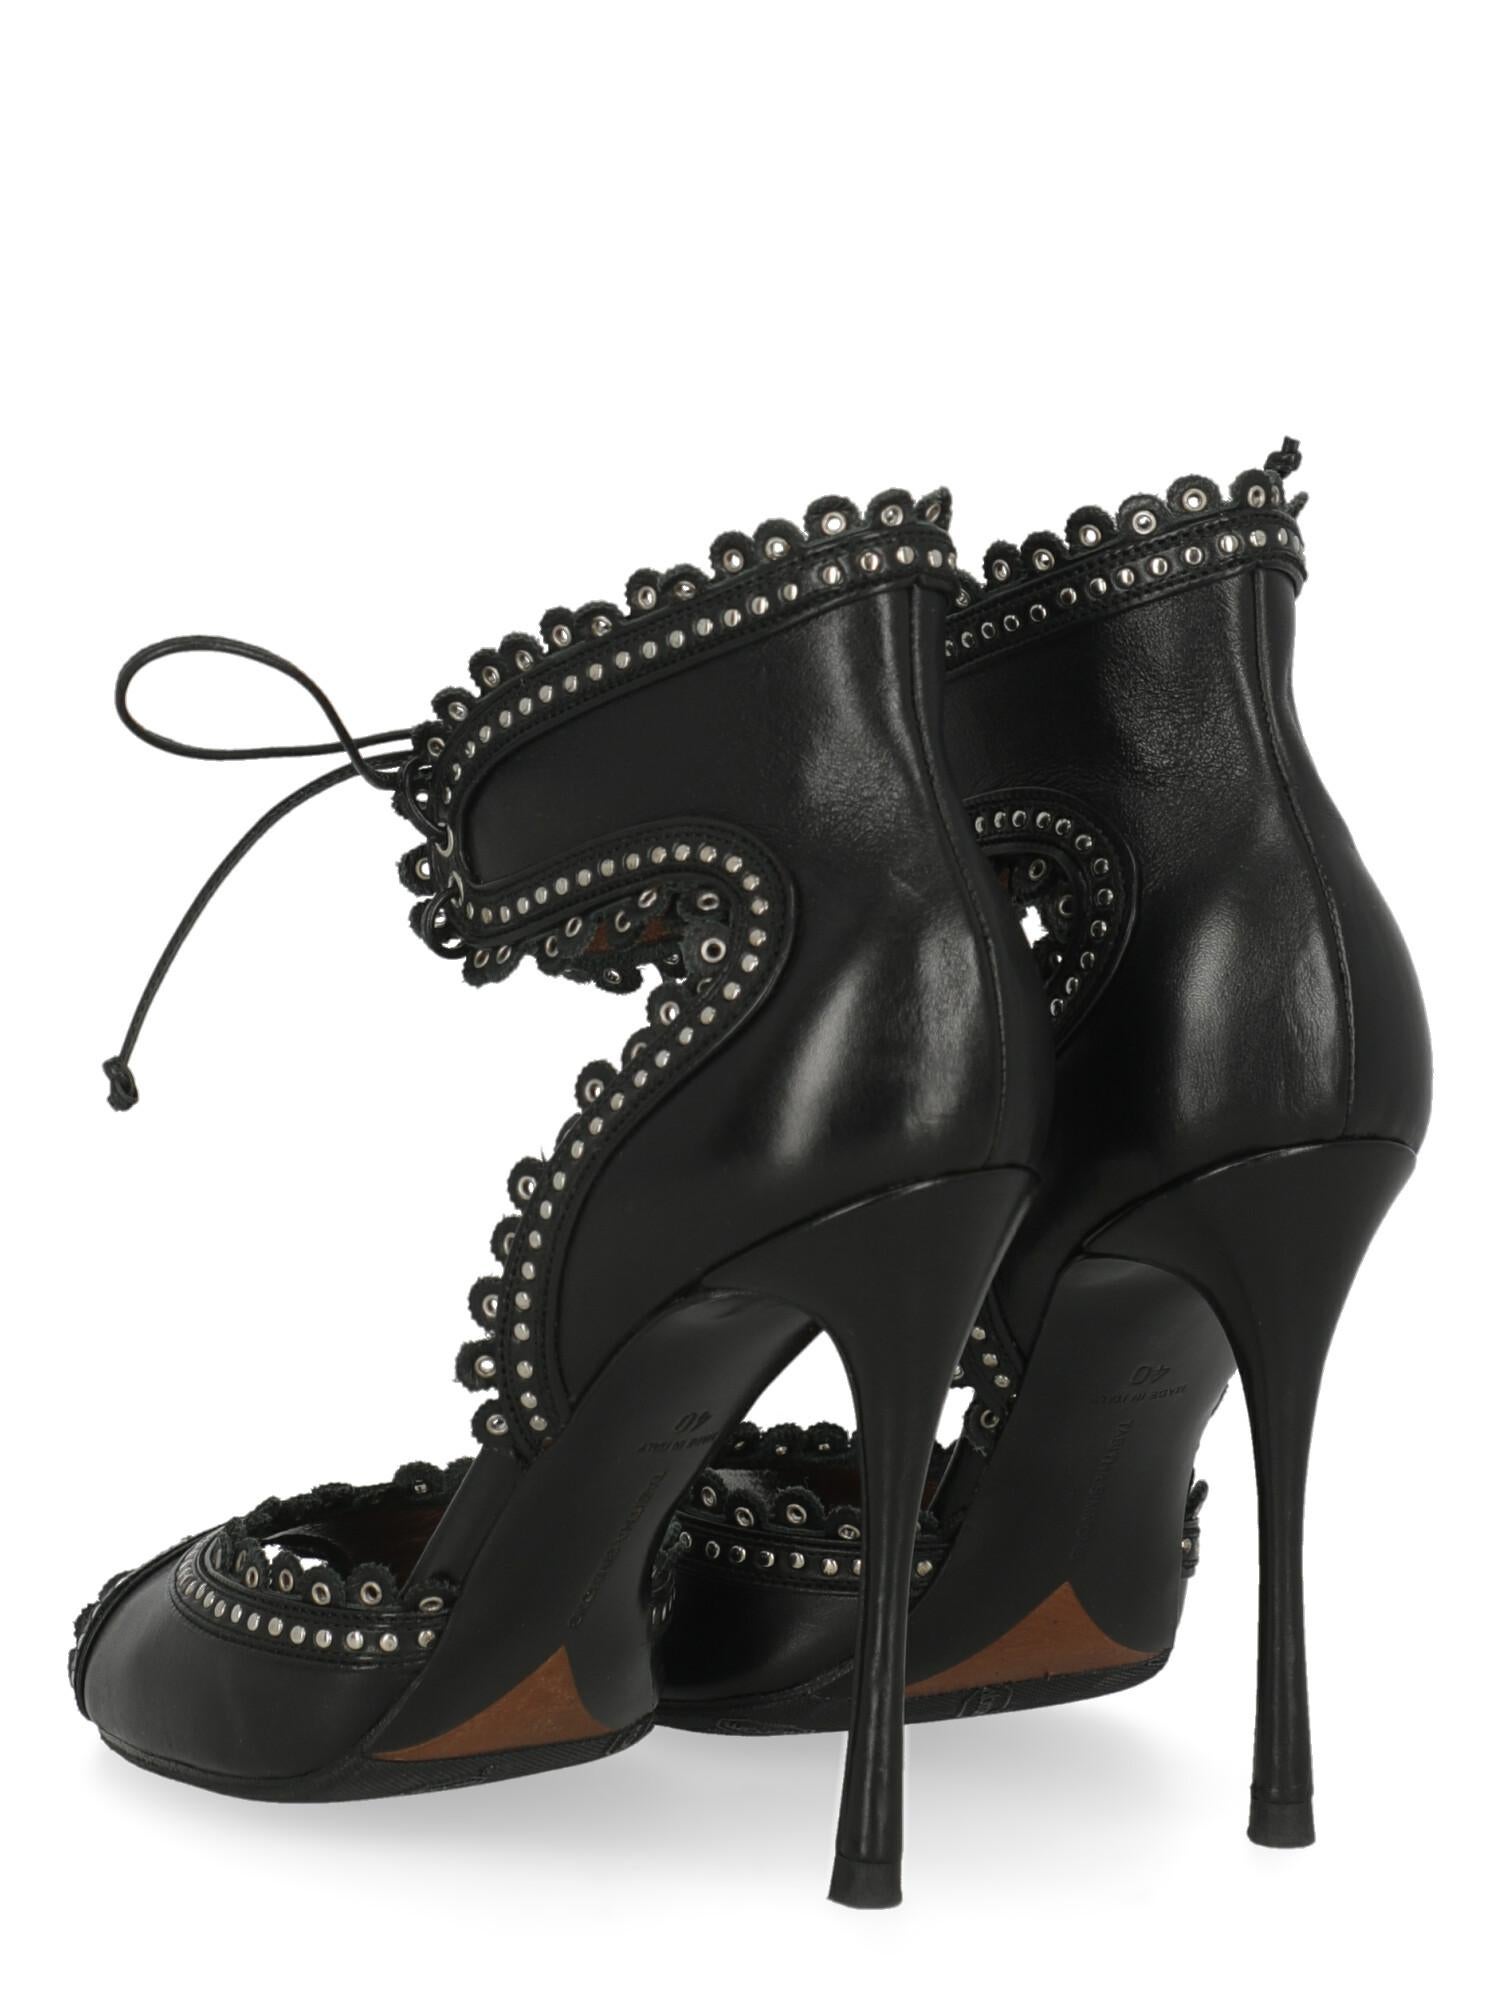 Women's Tabitha Simmons Women  Sandals Black Leather IT 40 For Sale